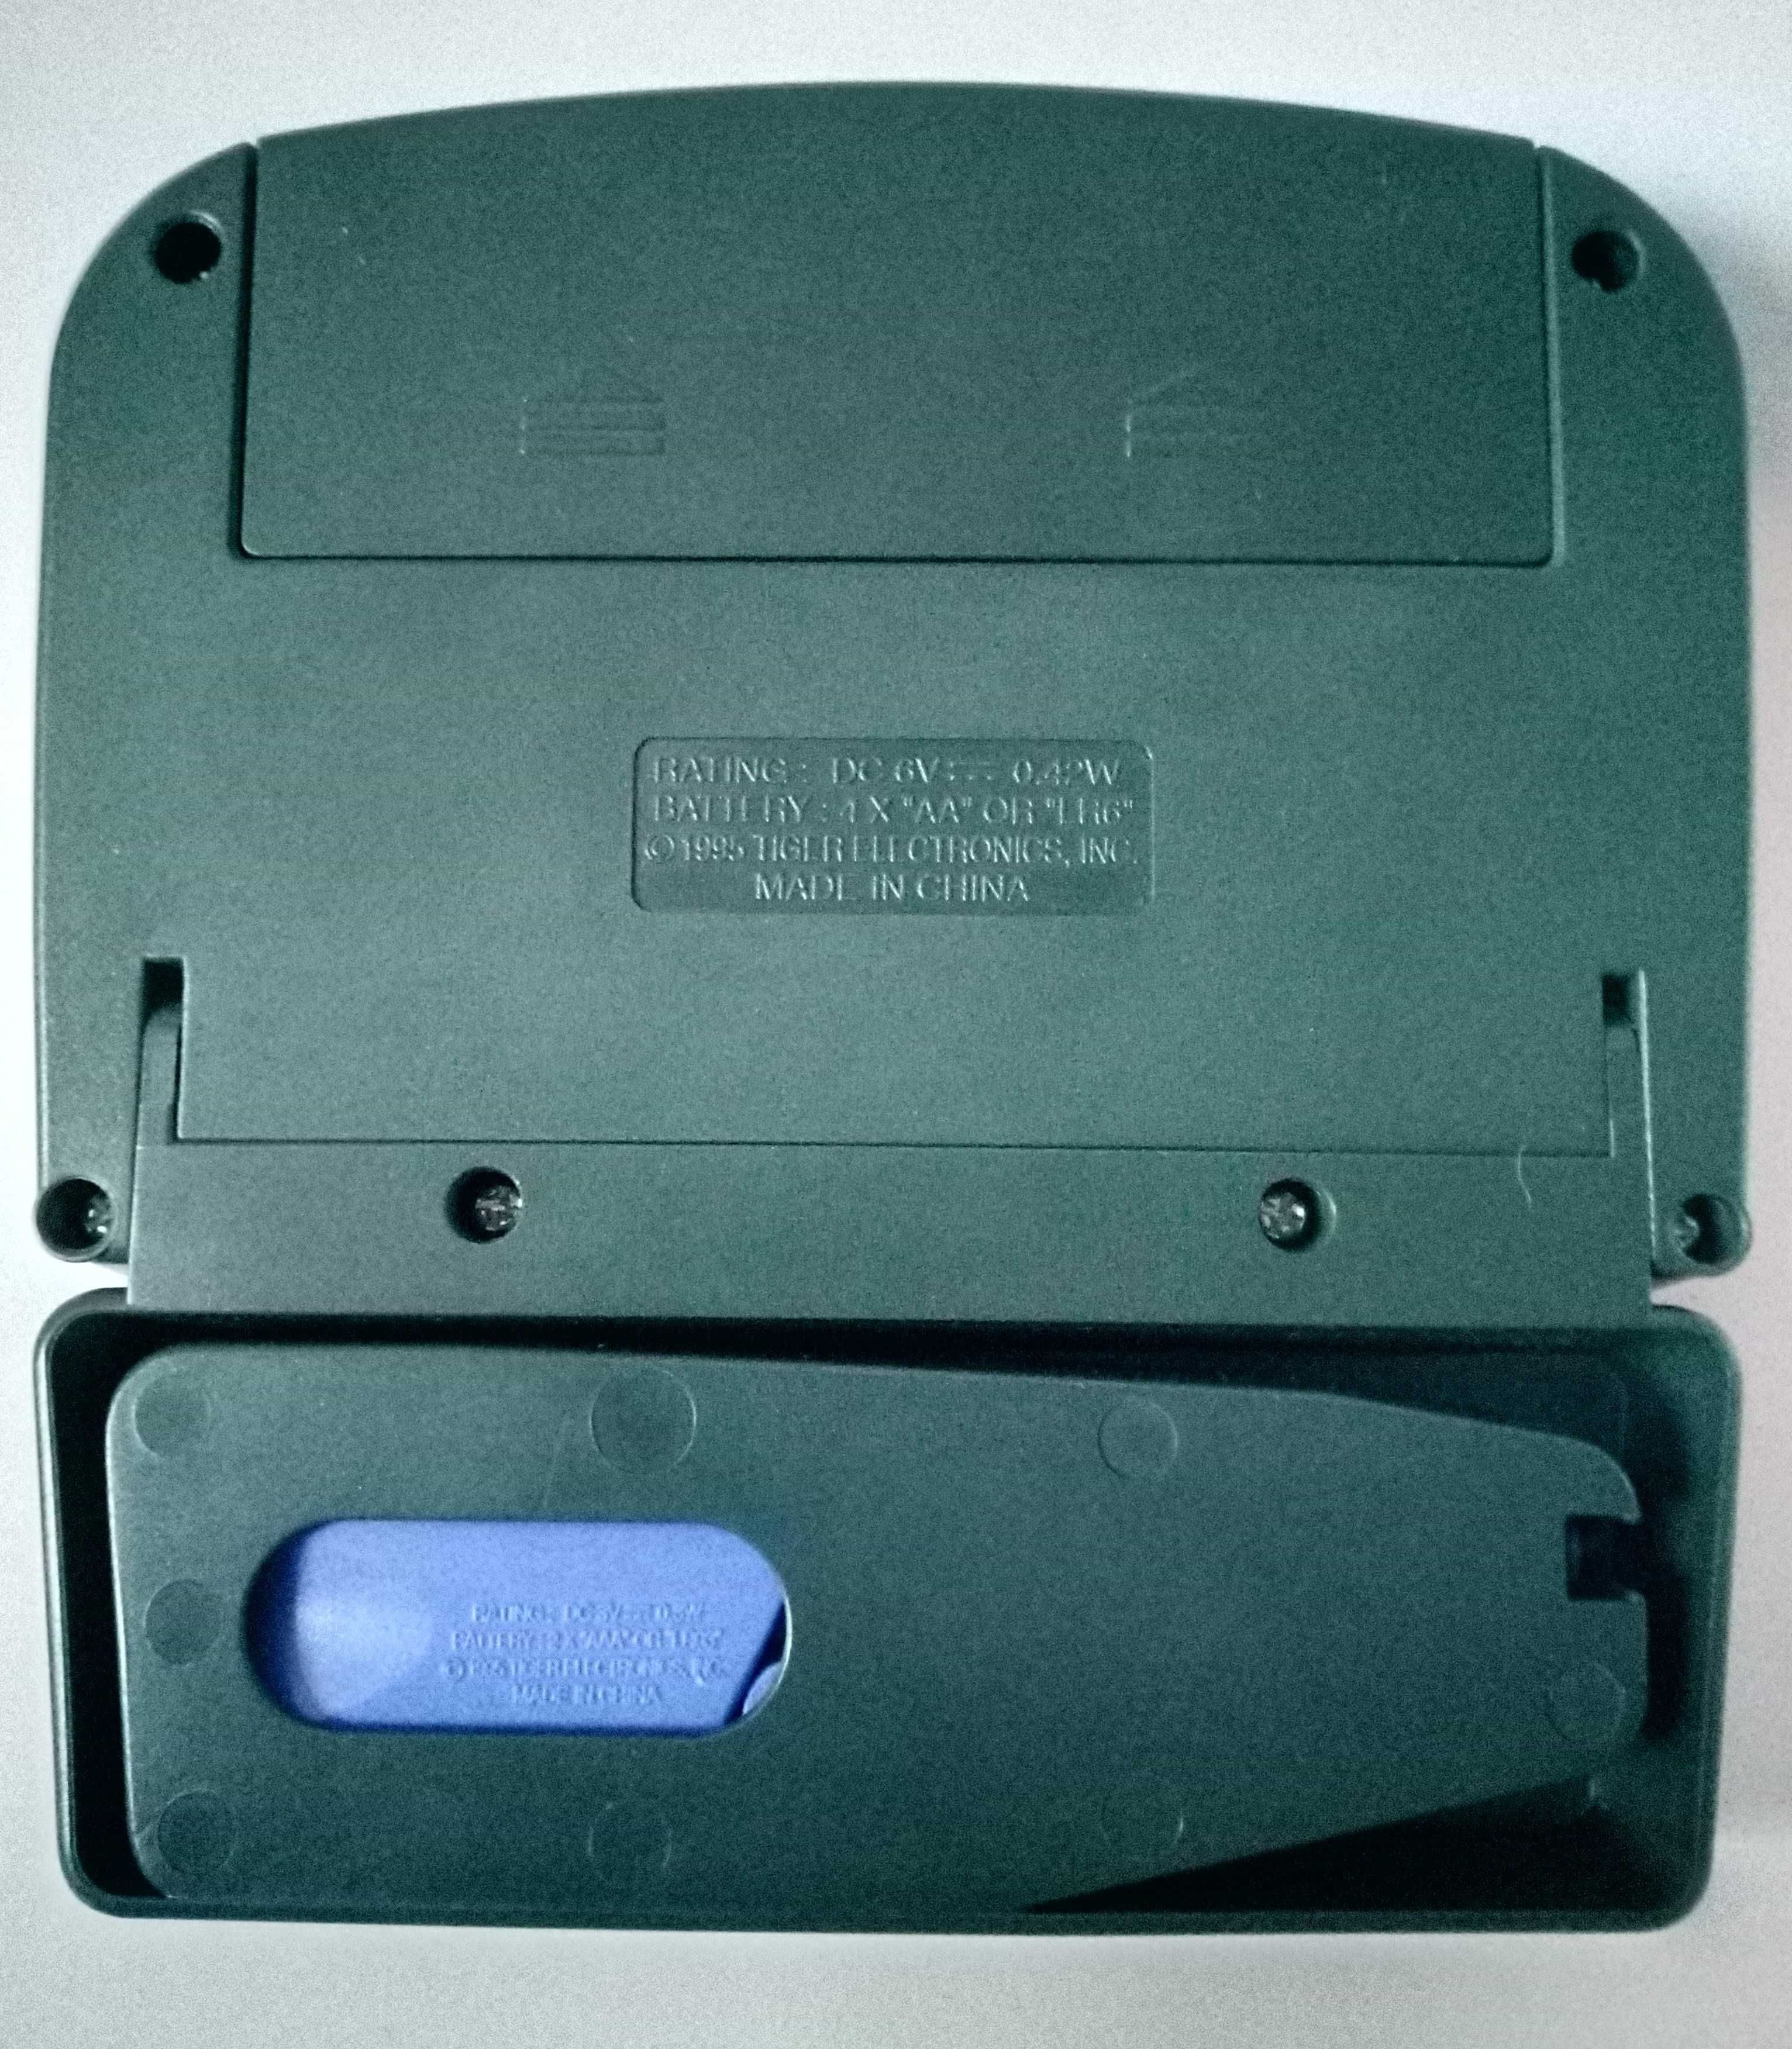 Sega Virtua Cop Handheld Tiger Laser Games - 1996r.